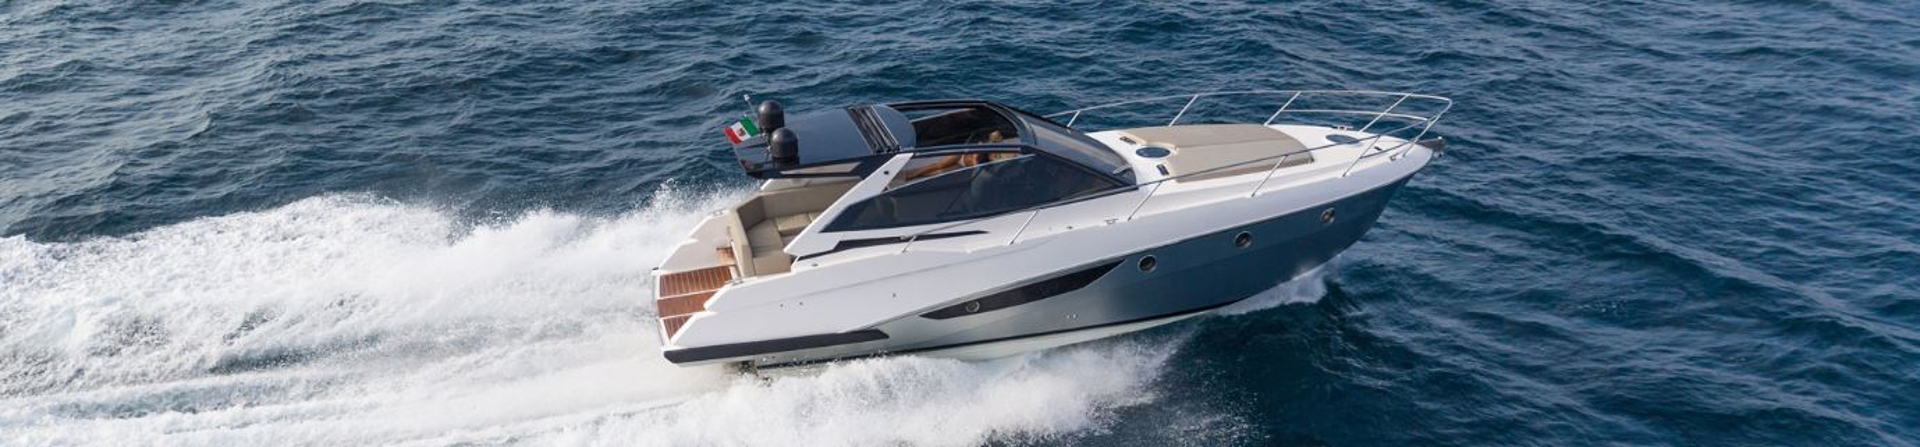 Motor yachts charter in Turkey